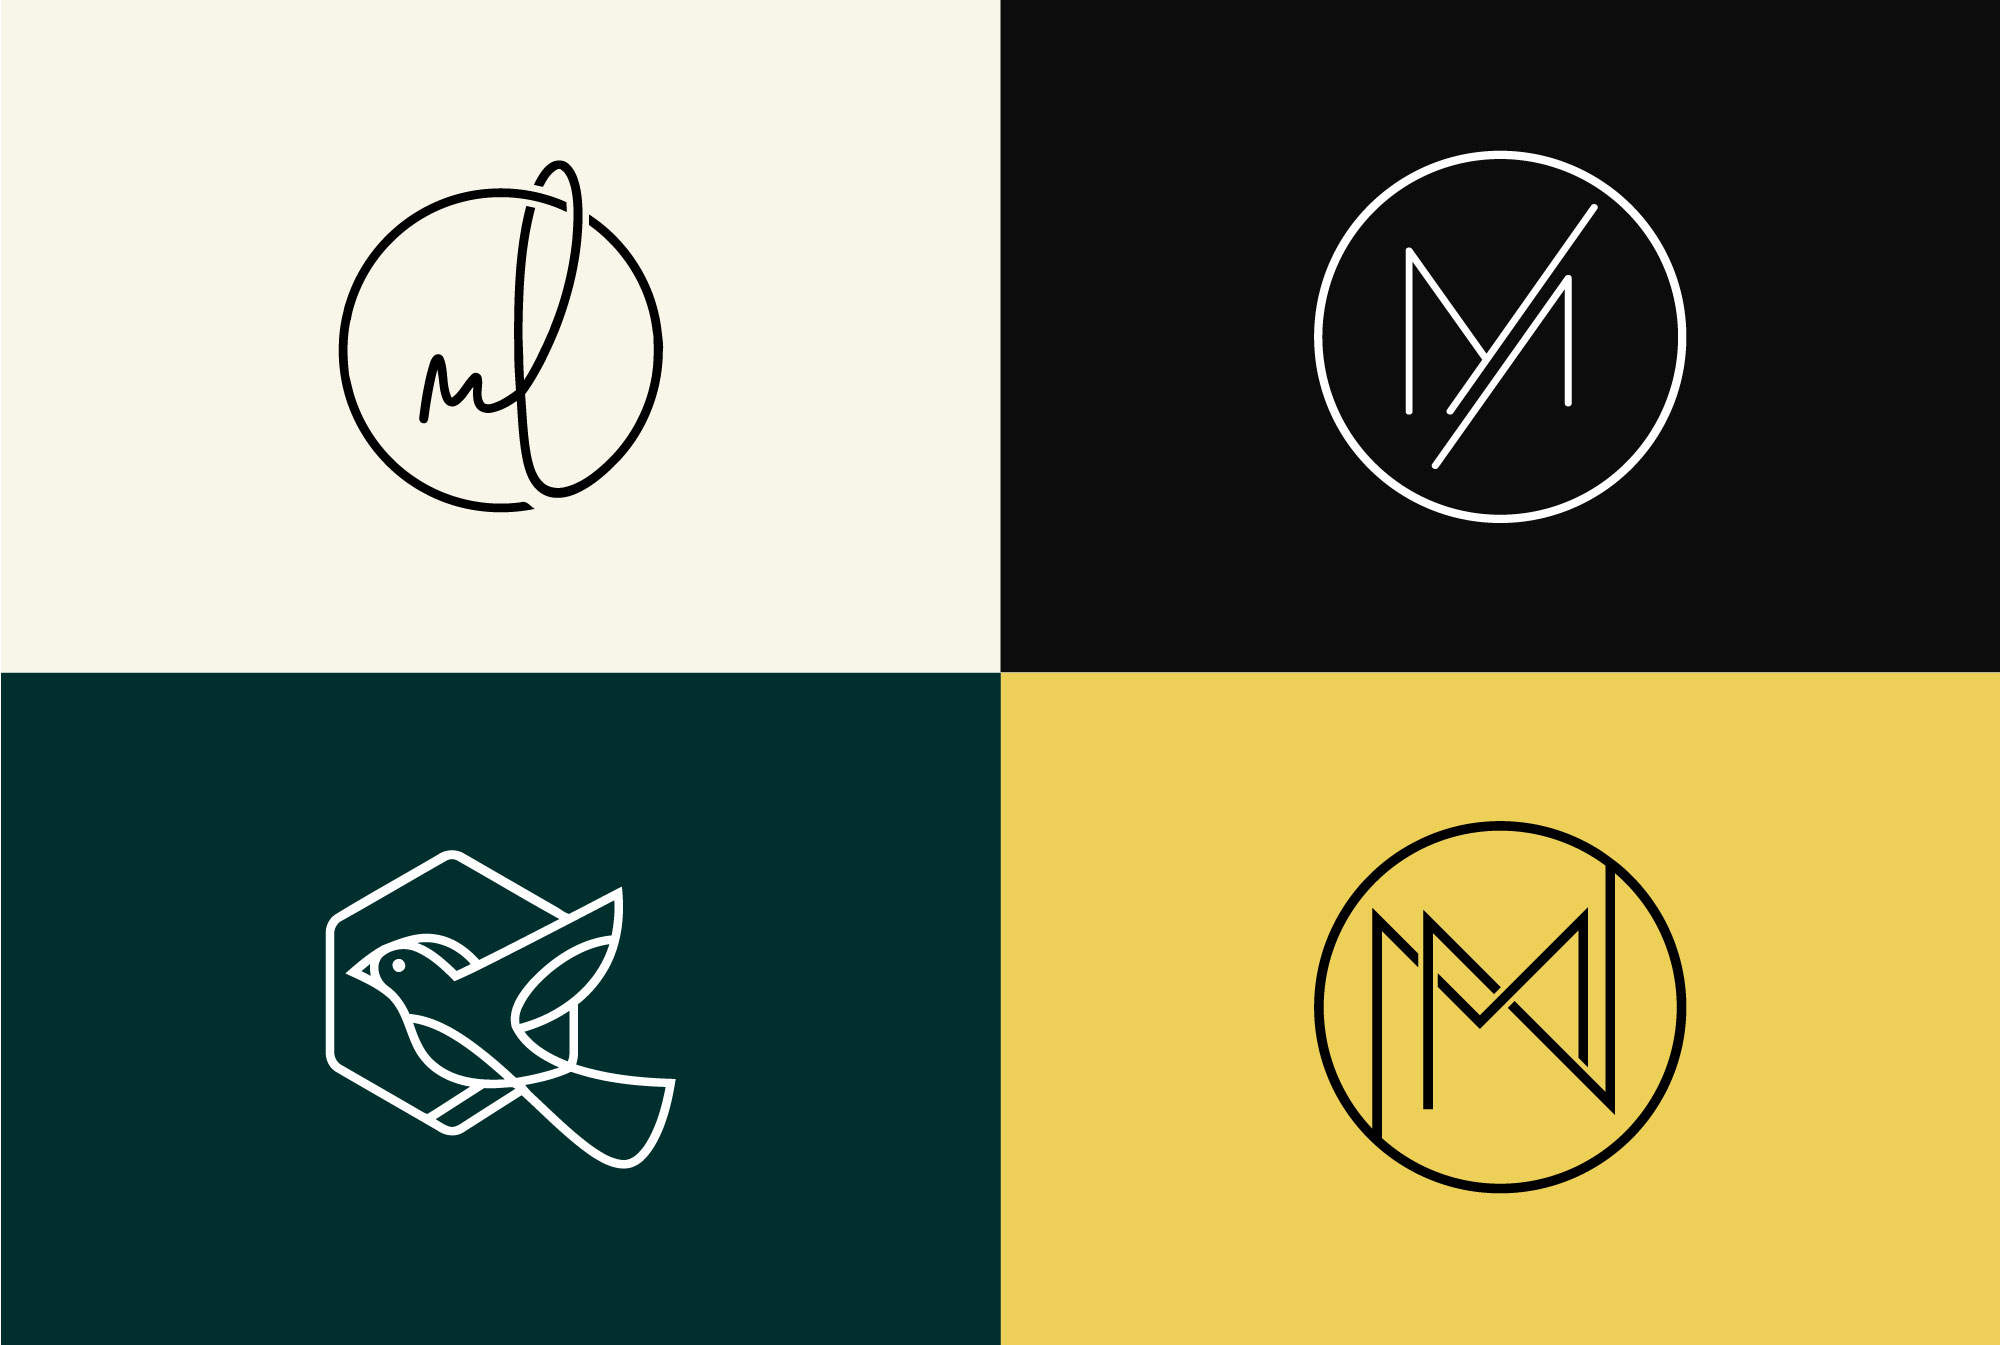 Minimalist Logo Design Free I Will Do Creative Flat Minimalist Modern